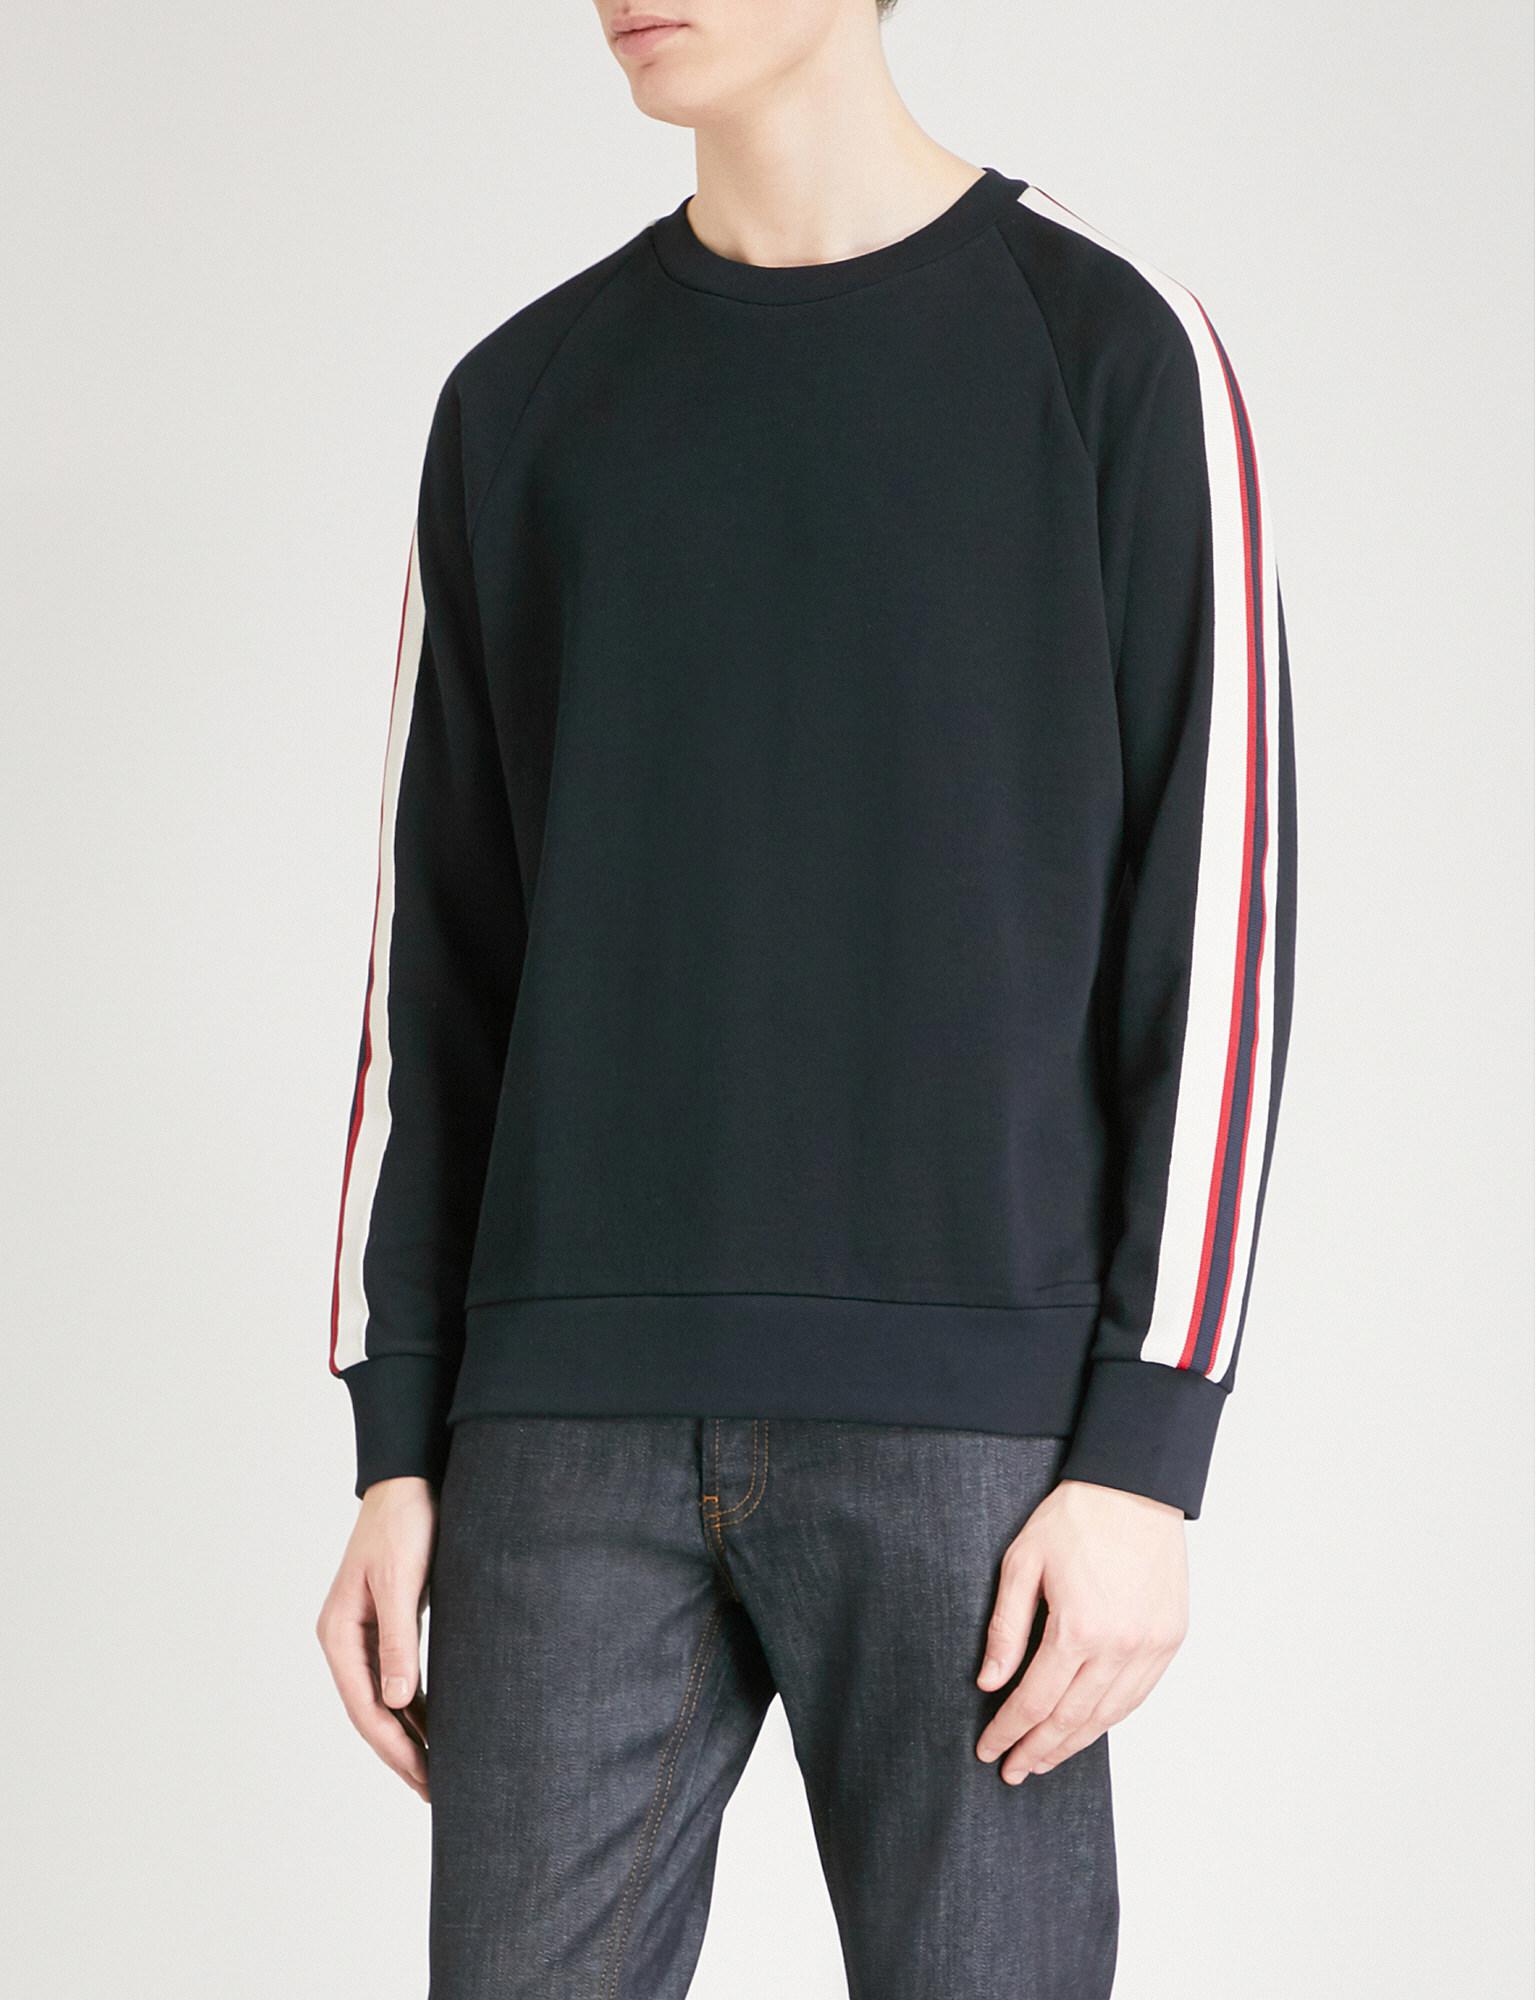 Sandro Striped-sleeve Cotton Sweatshirt for Men - Lyst